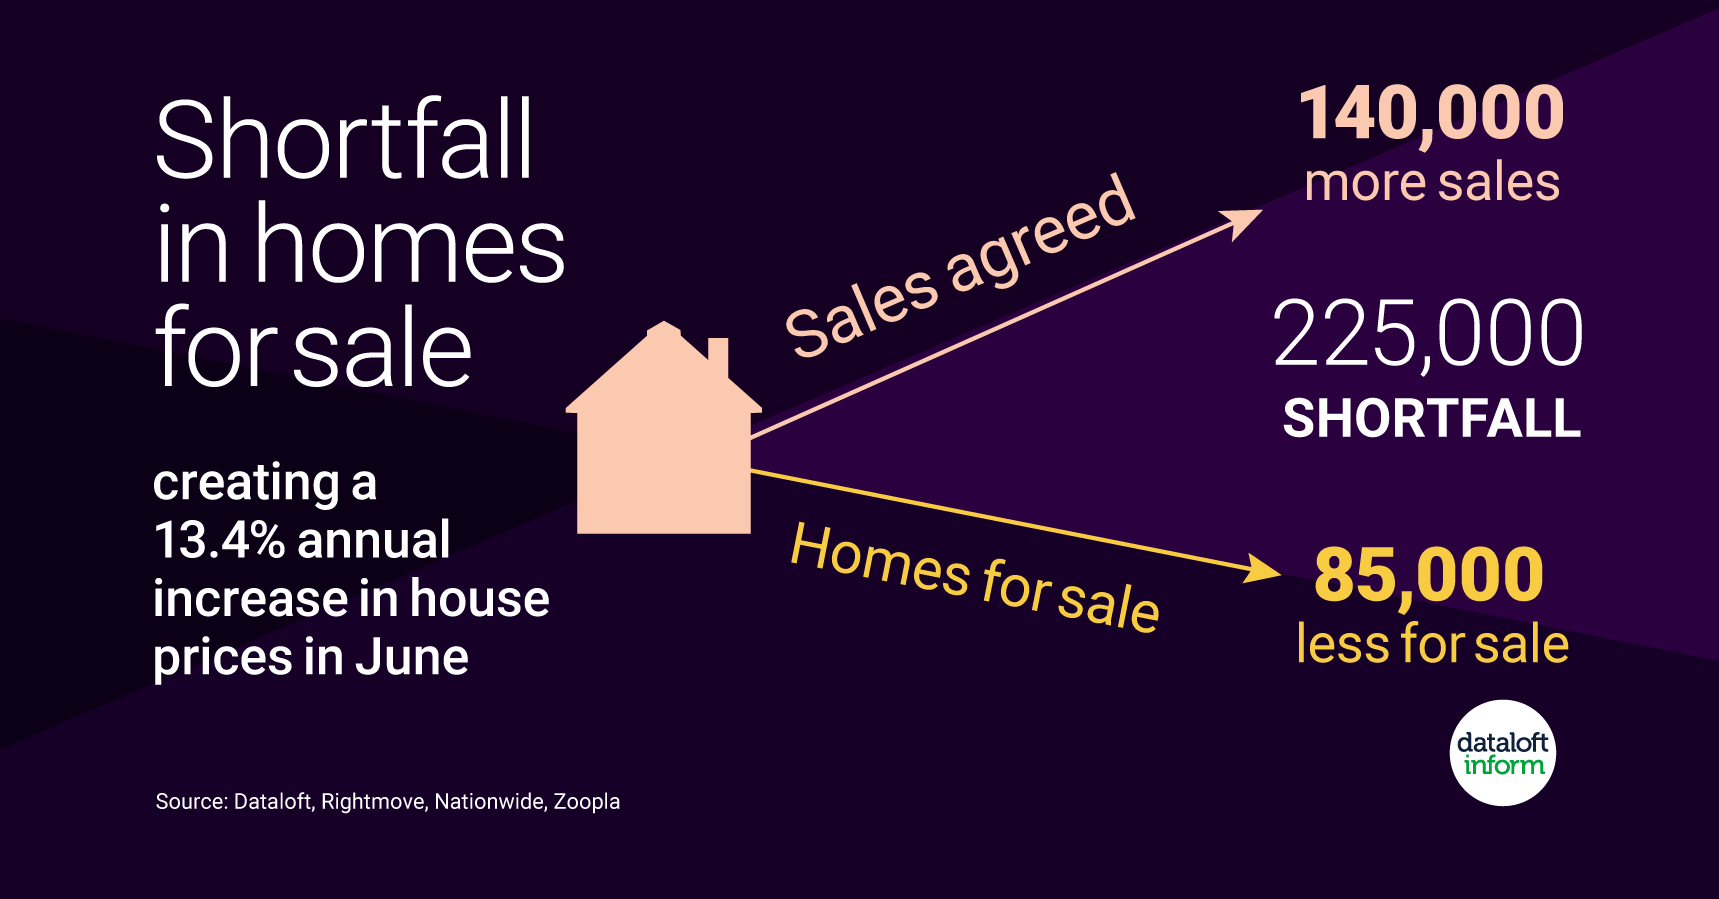 Shortfall in homes for sale